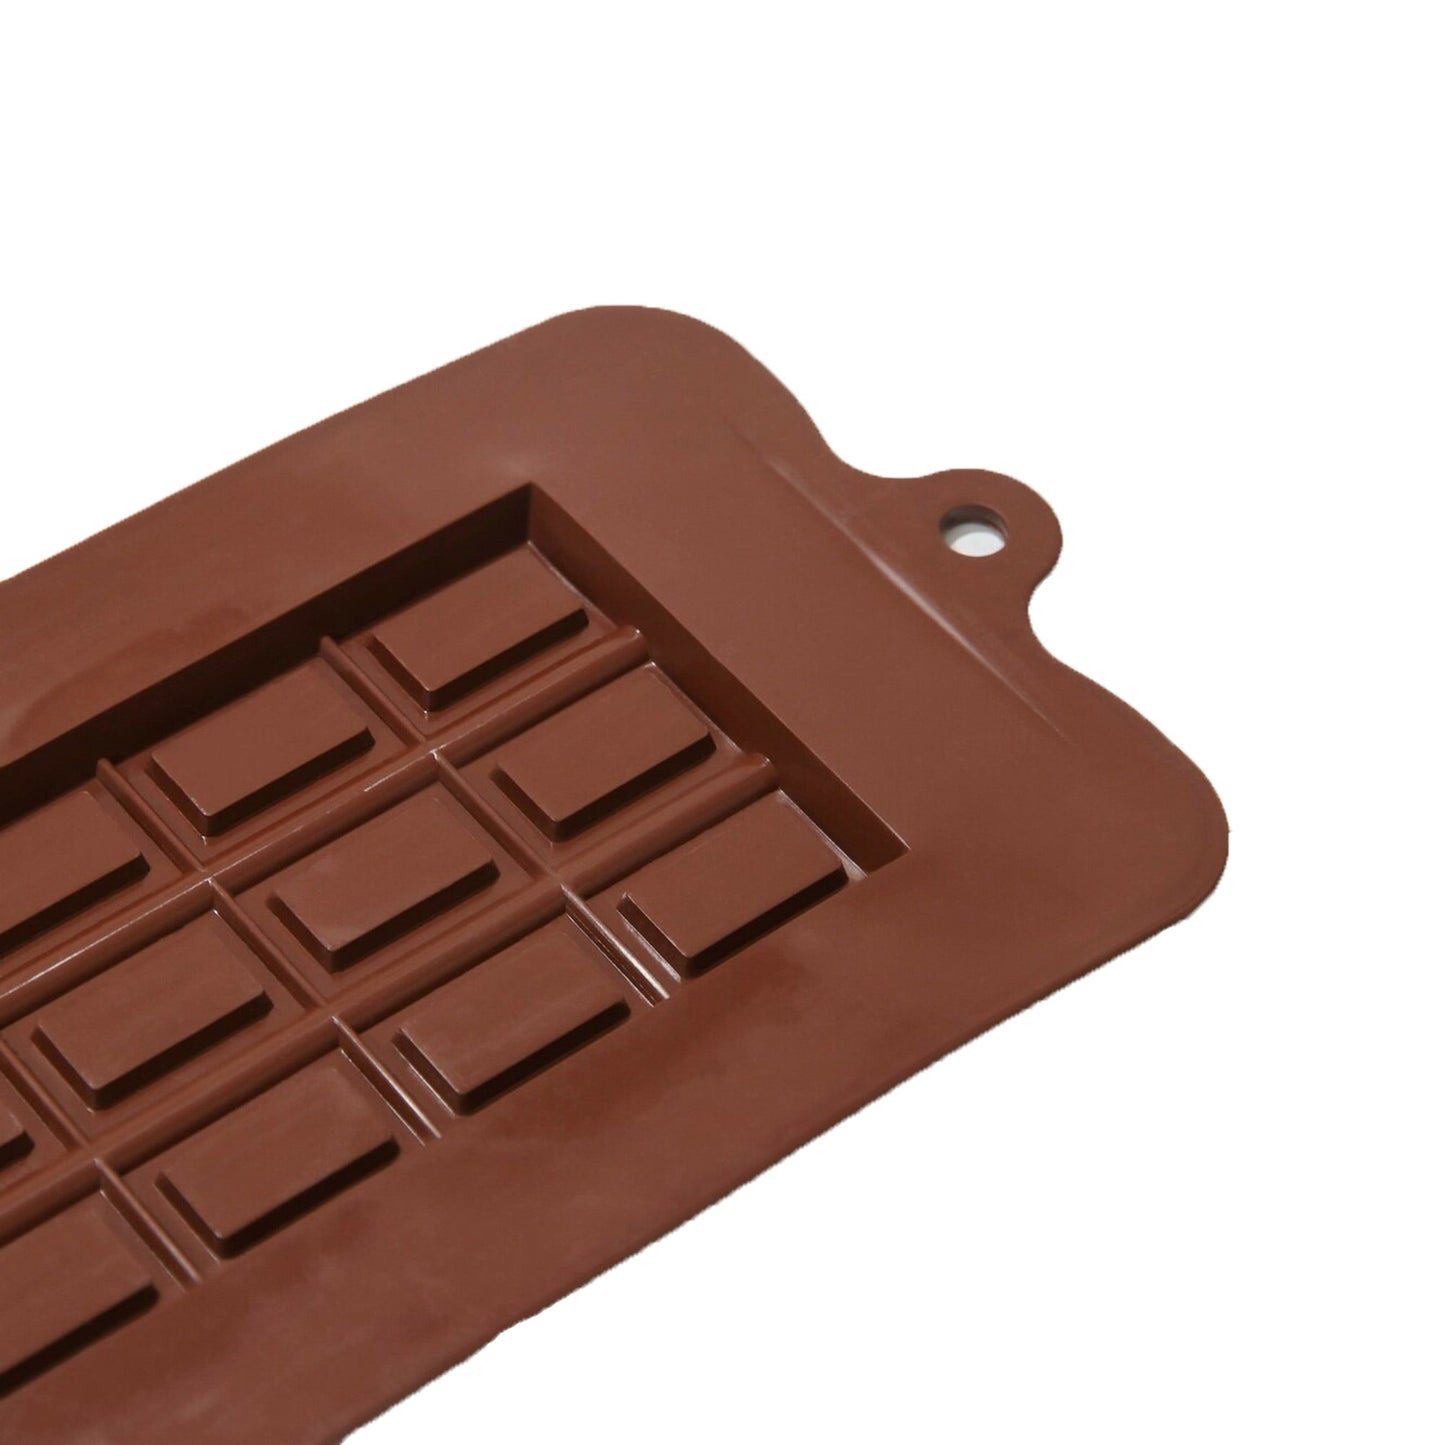 15 Pieces Break Away Silicone Chocolate Bar Mold